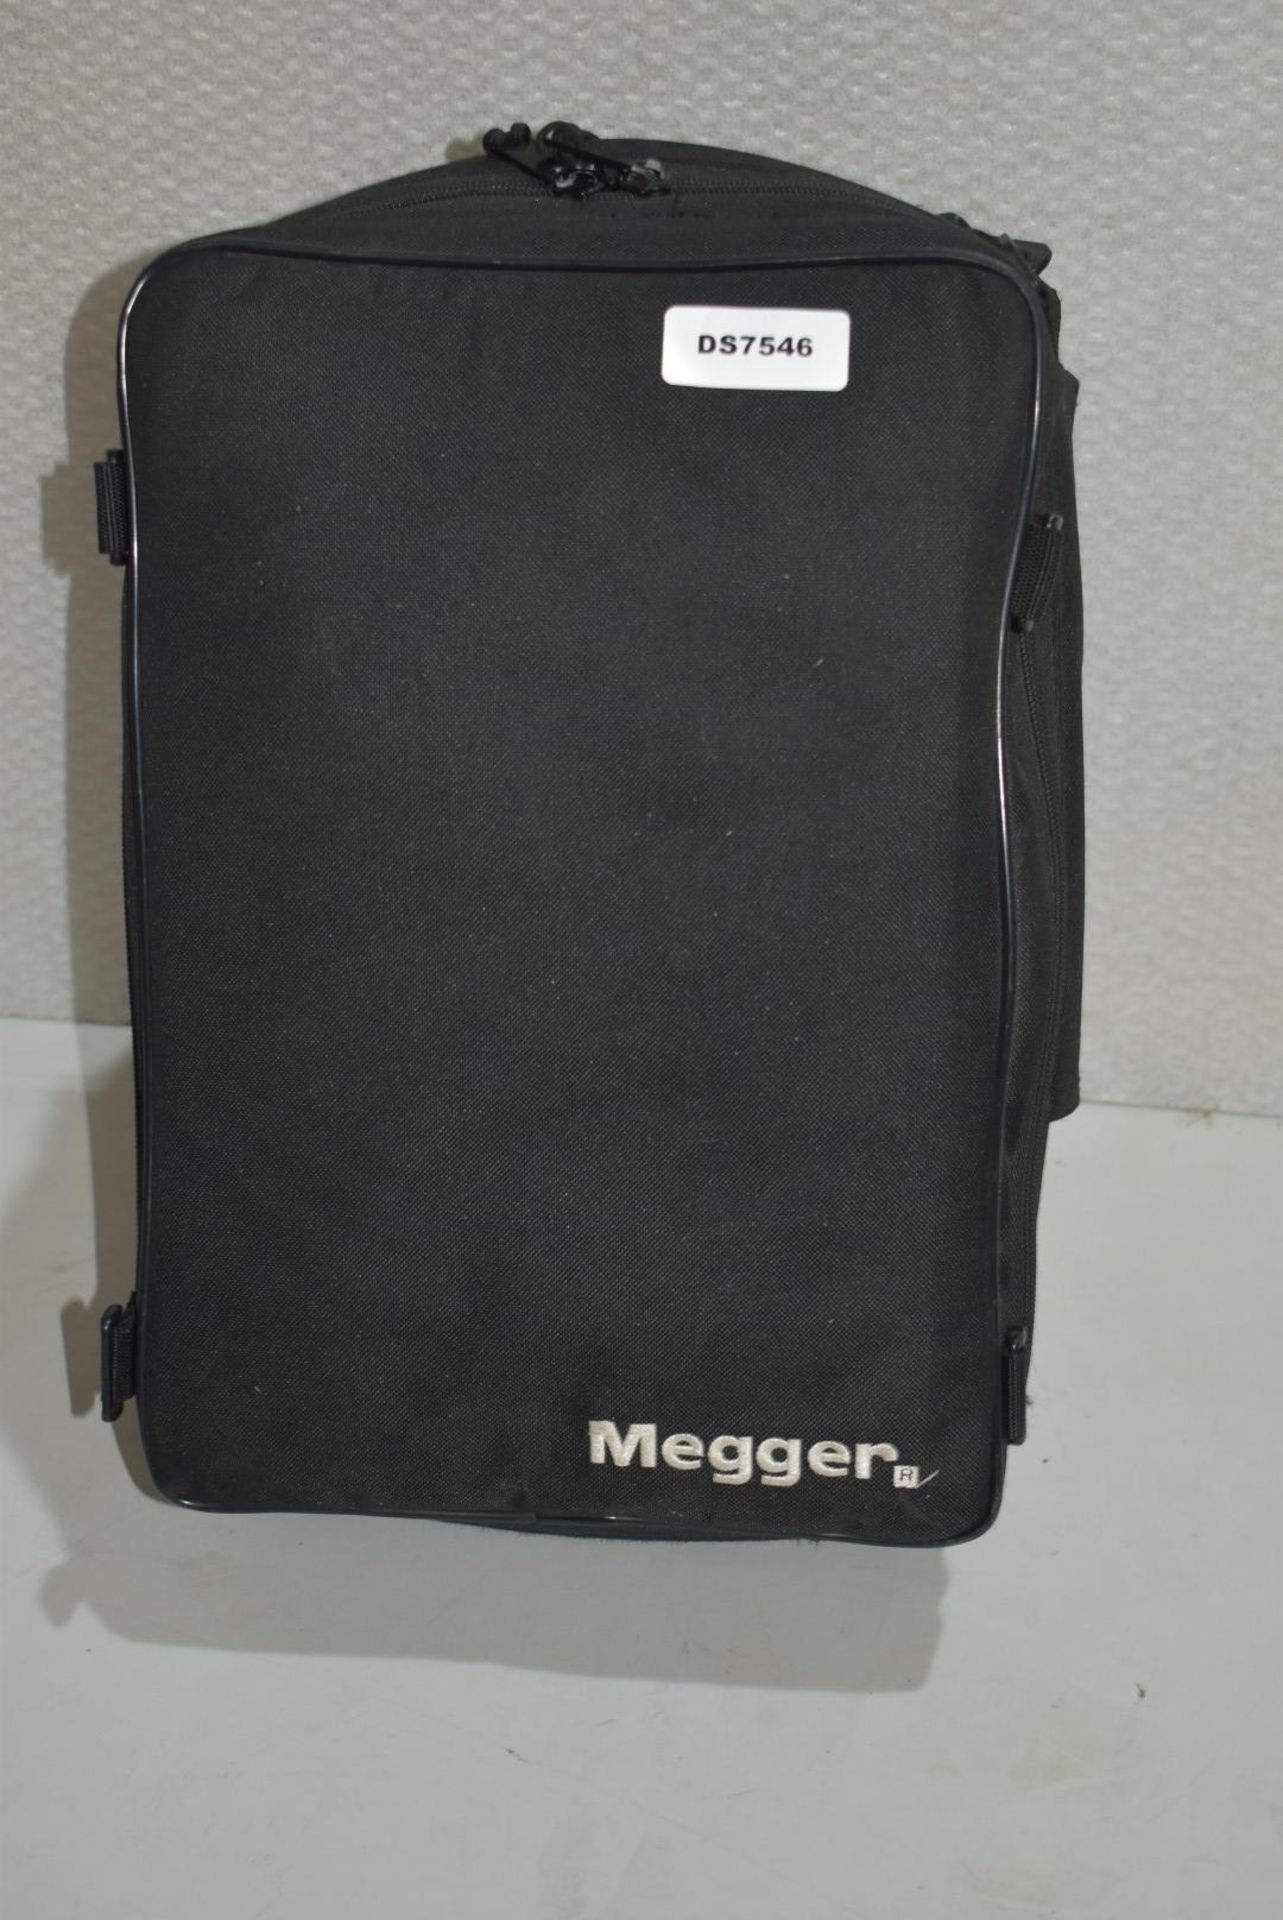 1 x MEGGER PAT420 Portable Appliance Tester- Original RRP £1,620.00 - Includes Power Lead, Pocket - Image 4 of 6